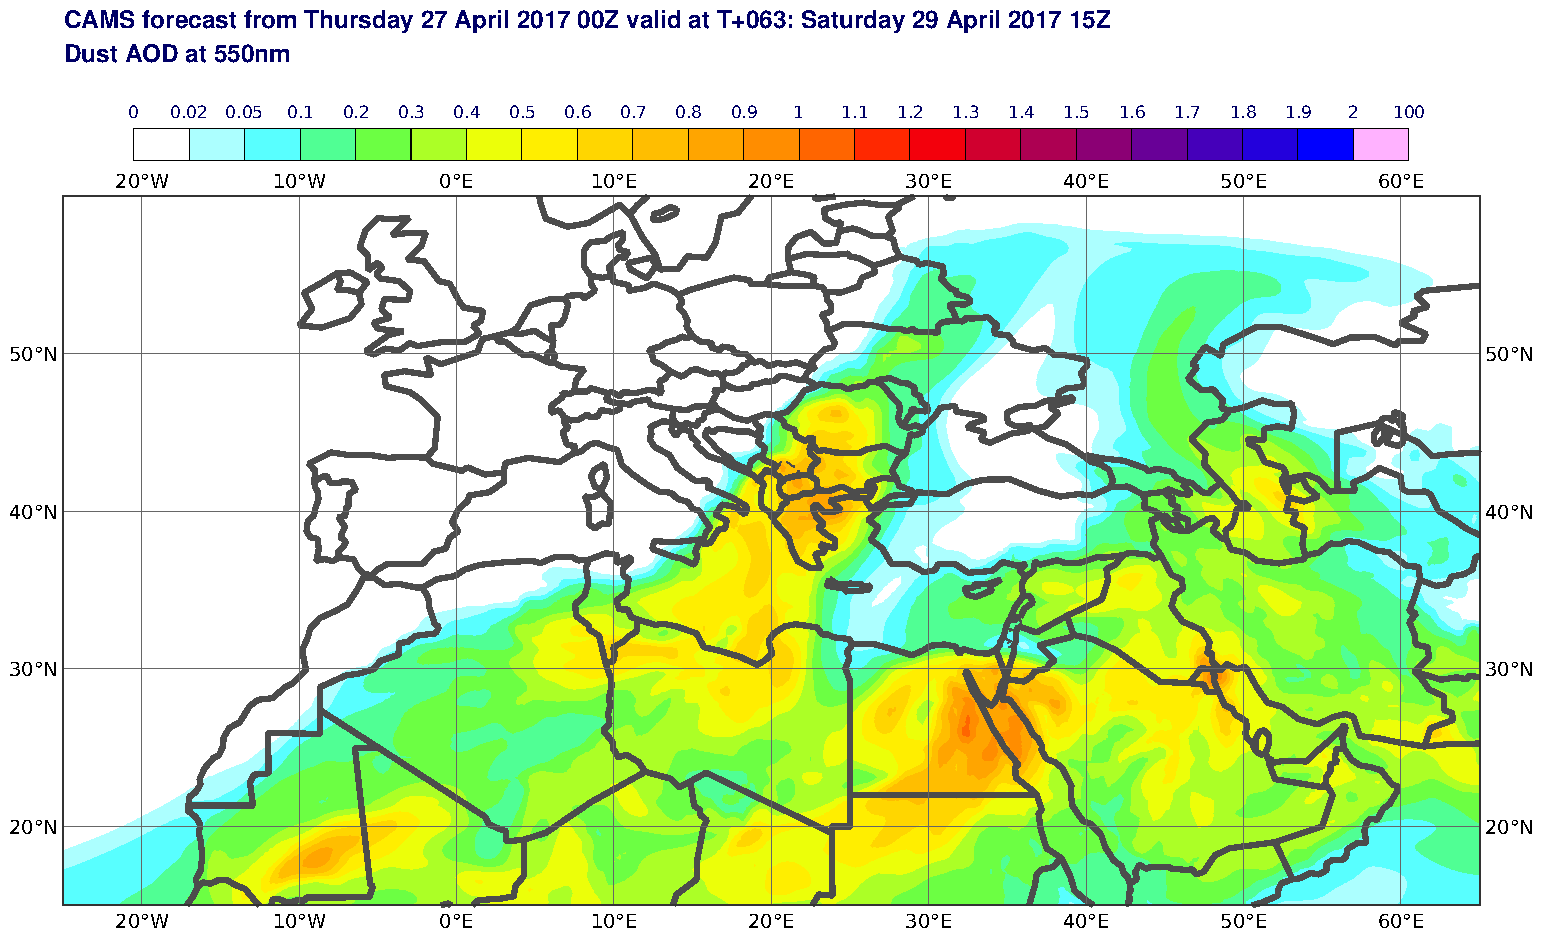 Dust AOD at 550nm valid at T63 - 2017-04-29 15:00